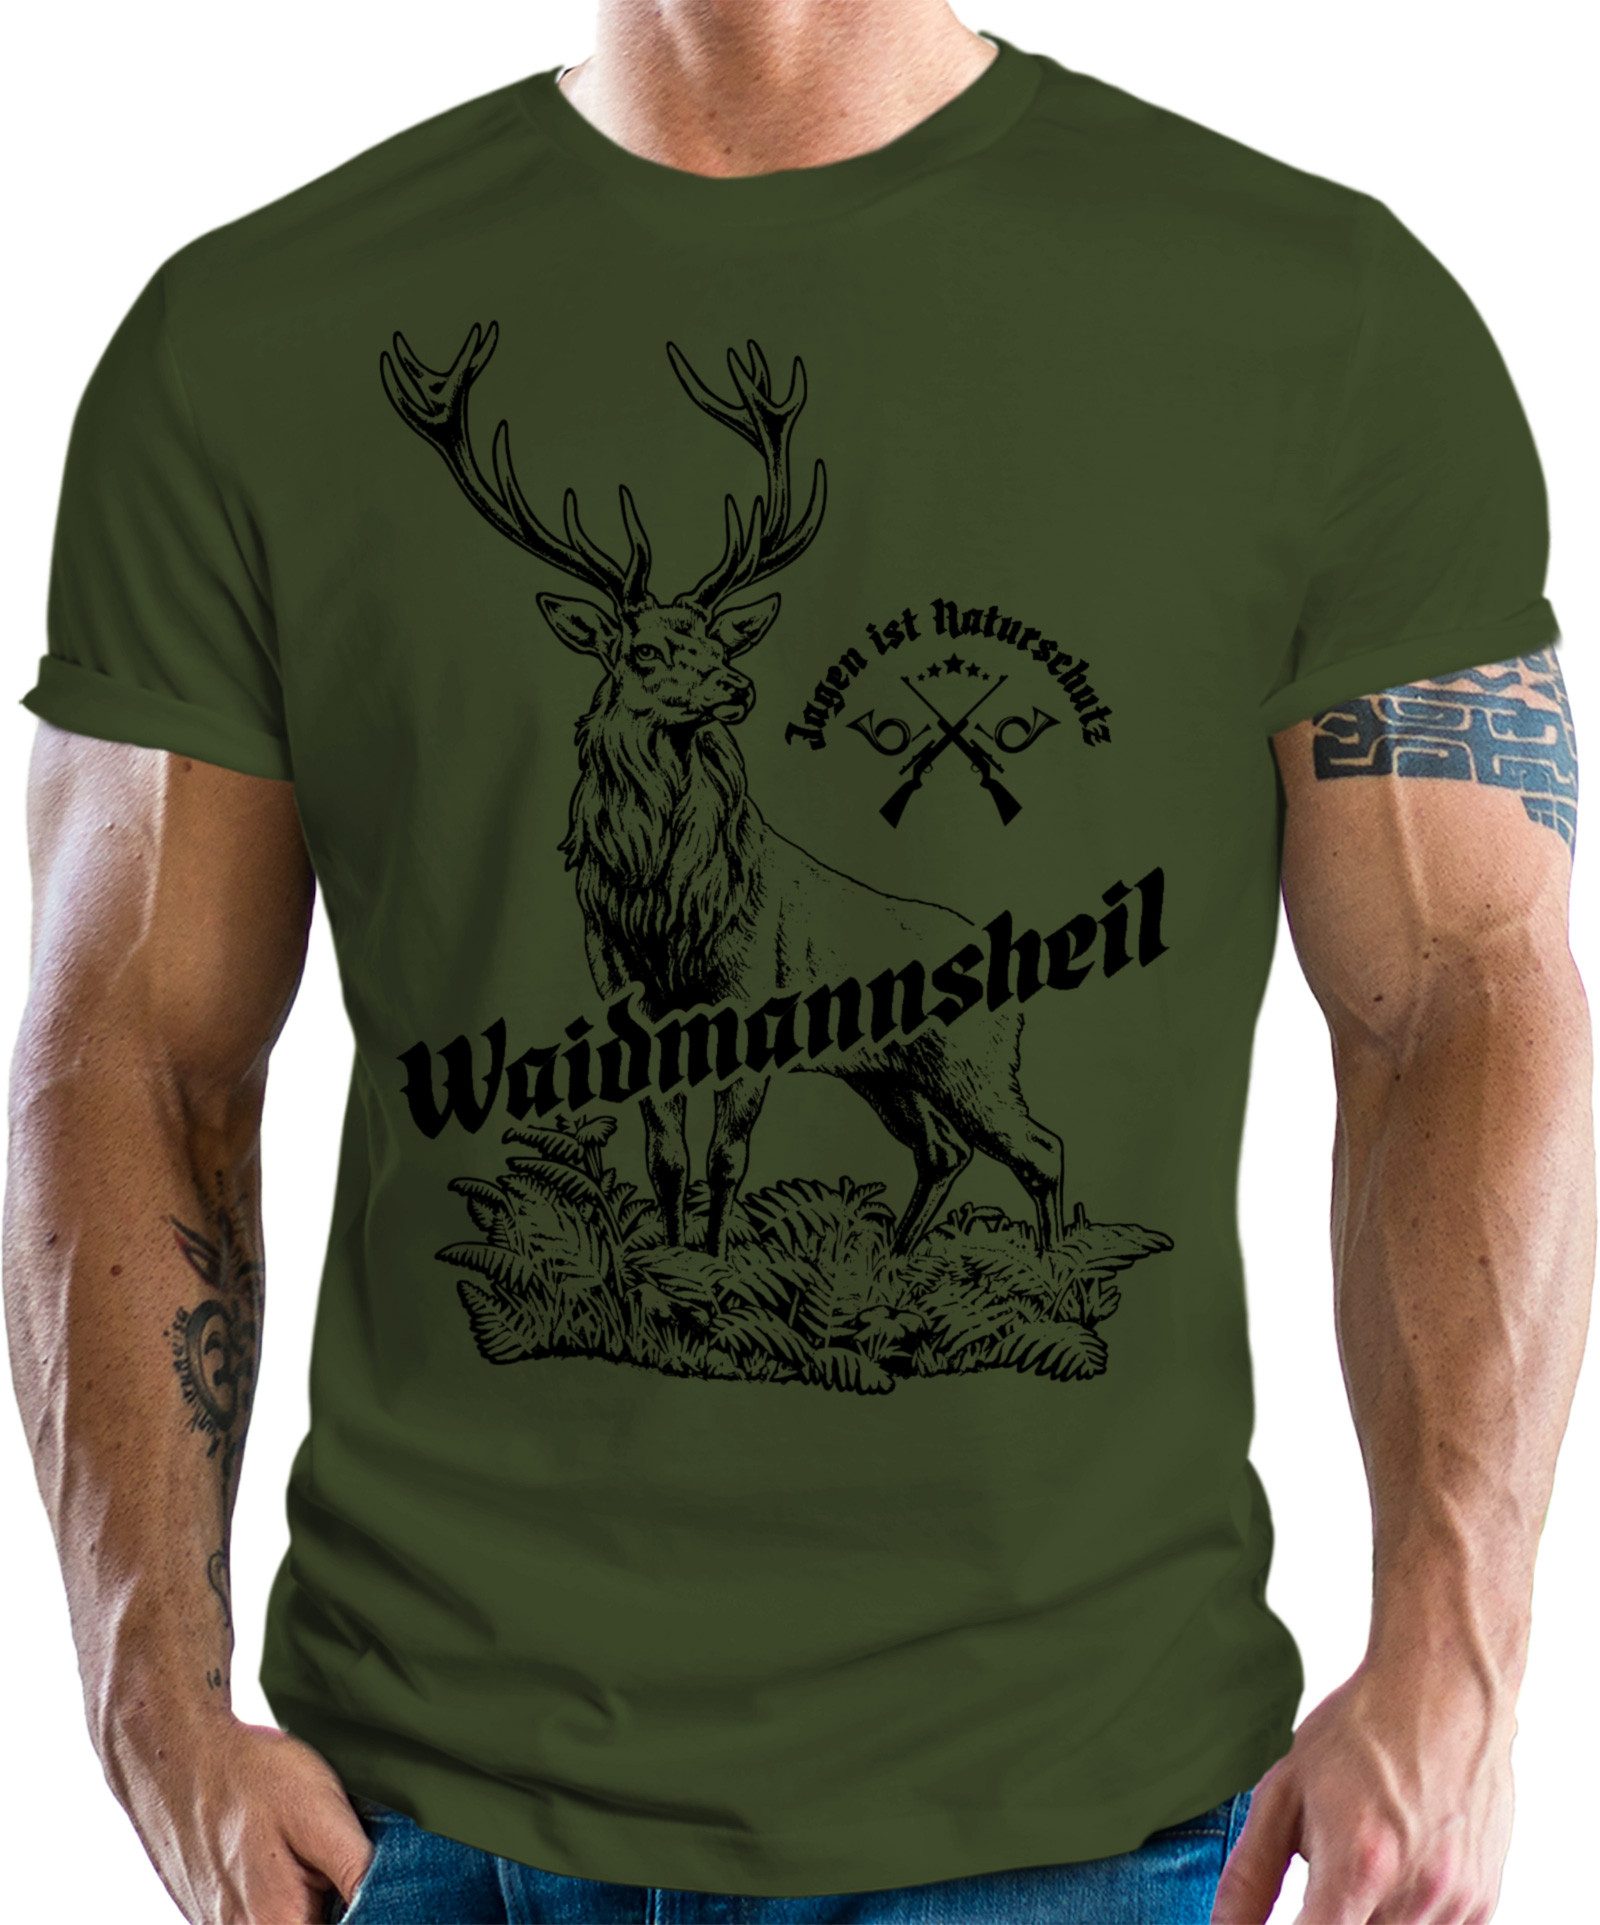 LOBO NEGRO® T-Shirt für Jäger: Waidmannsheil - Jagen ist Naturschutz